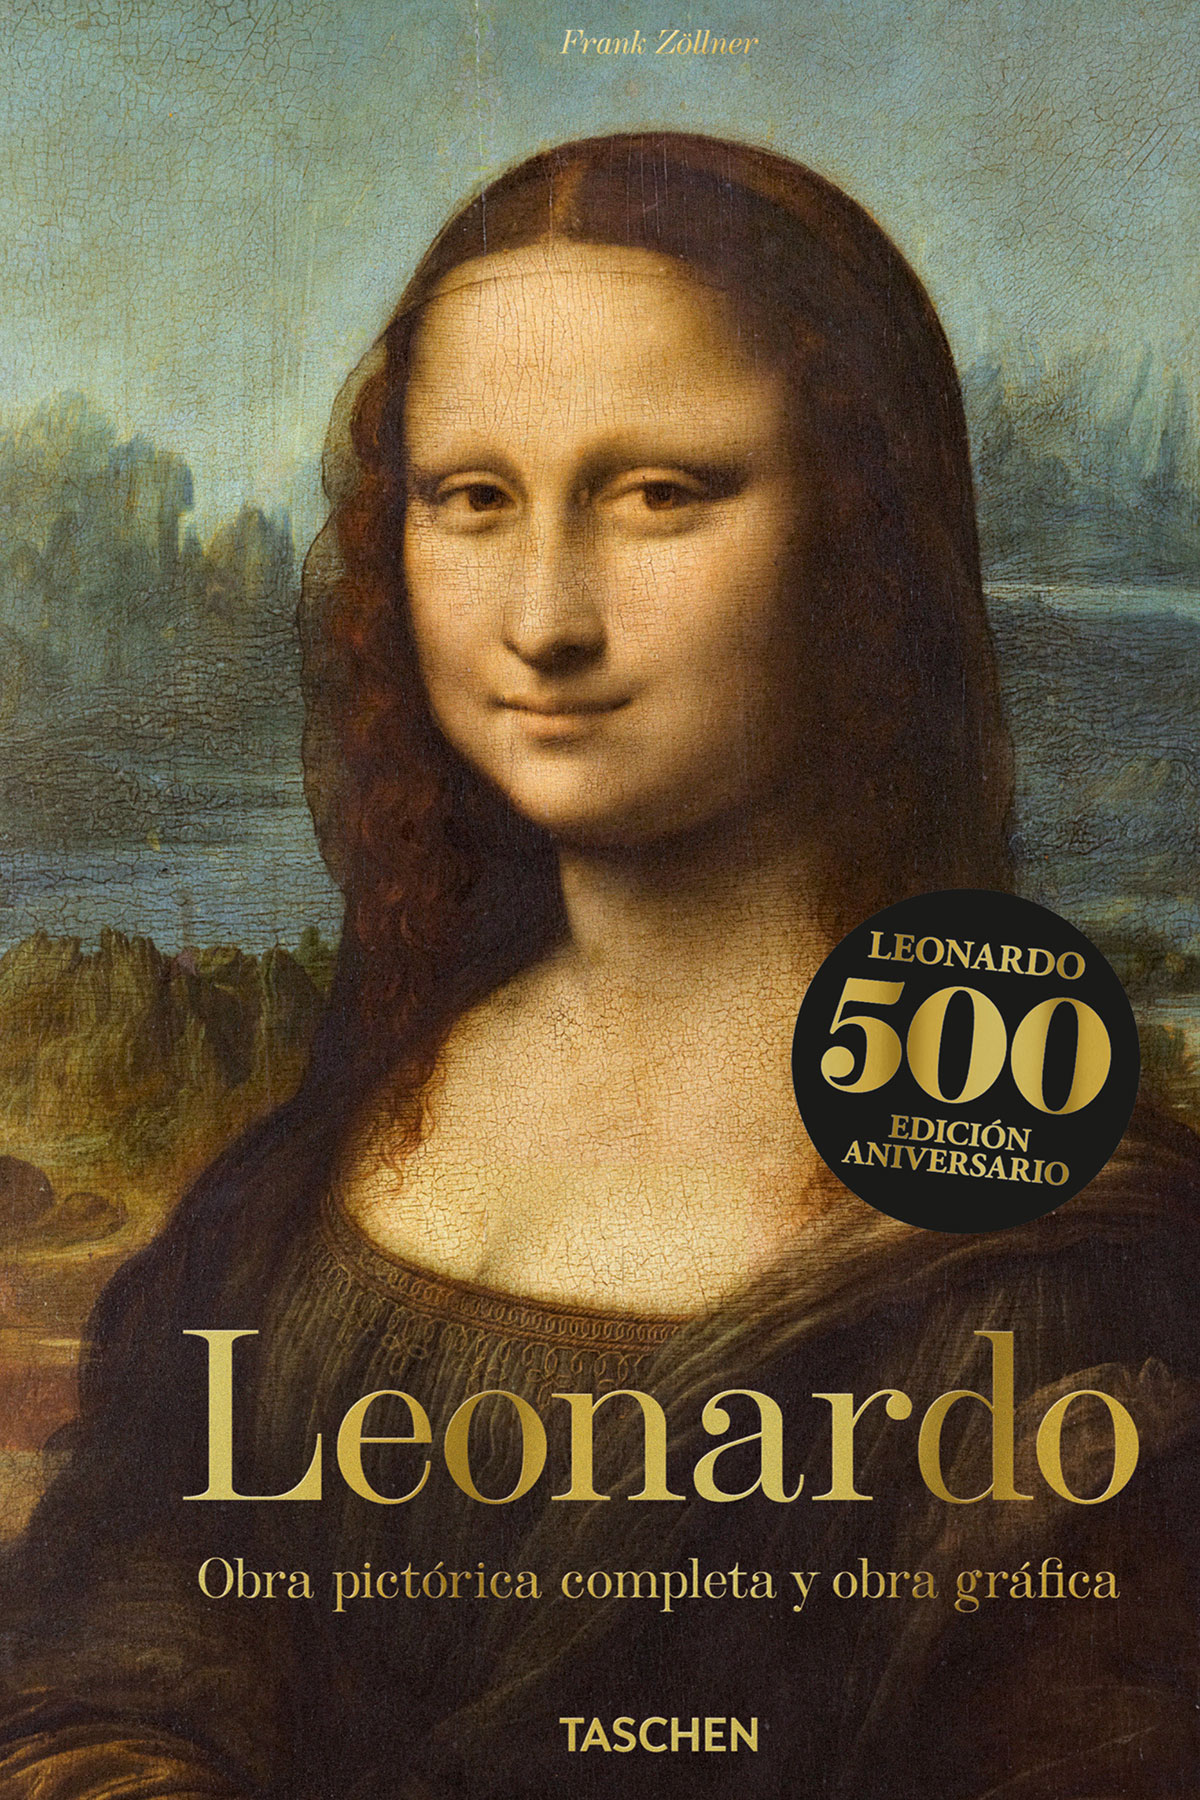 Libro Taschen Leonardo1